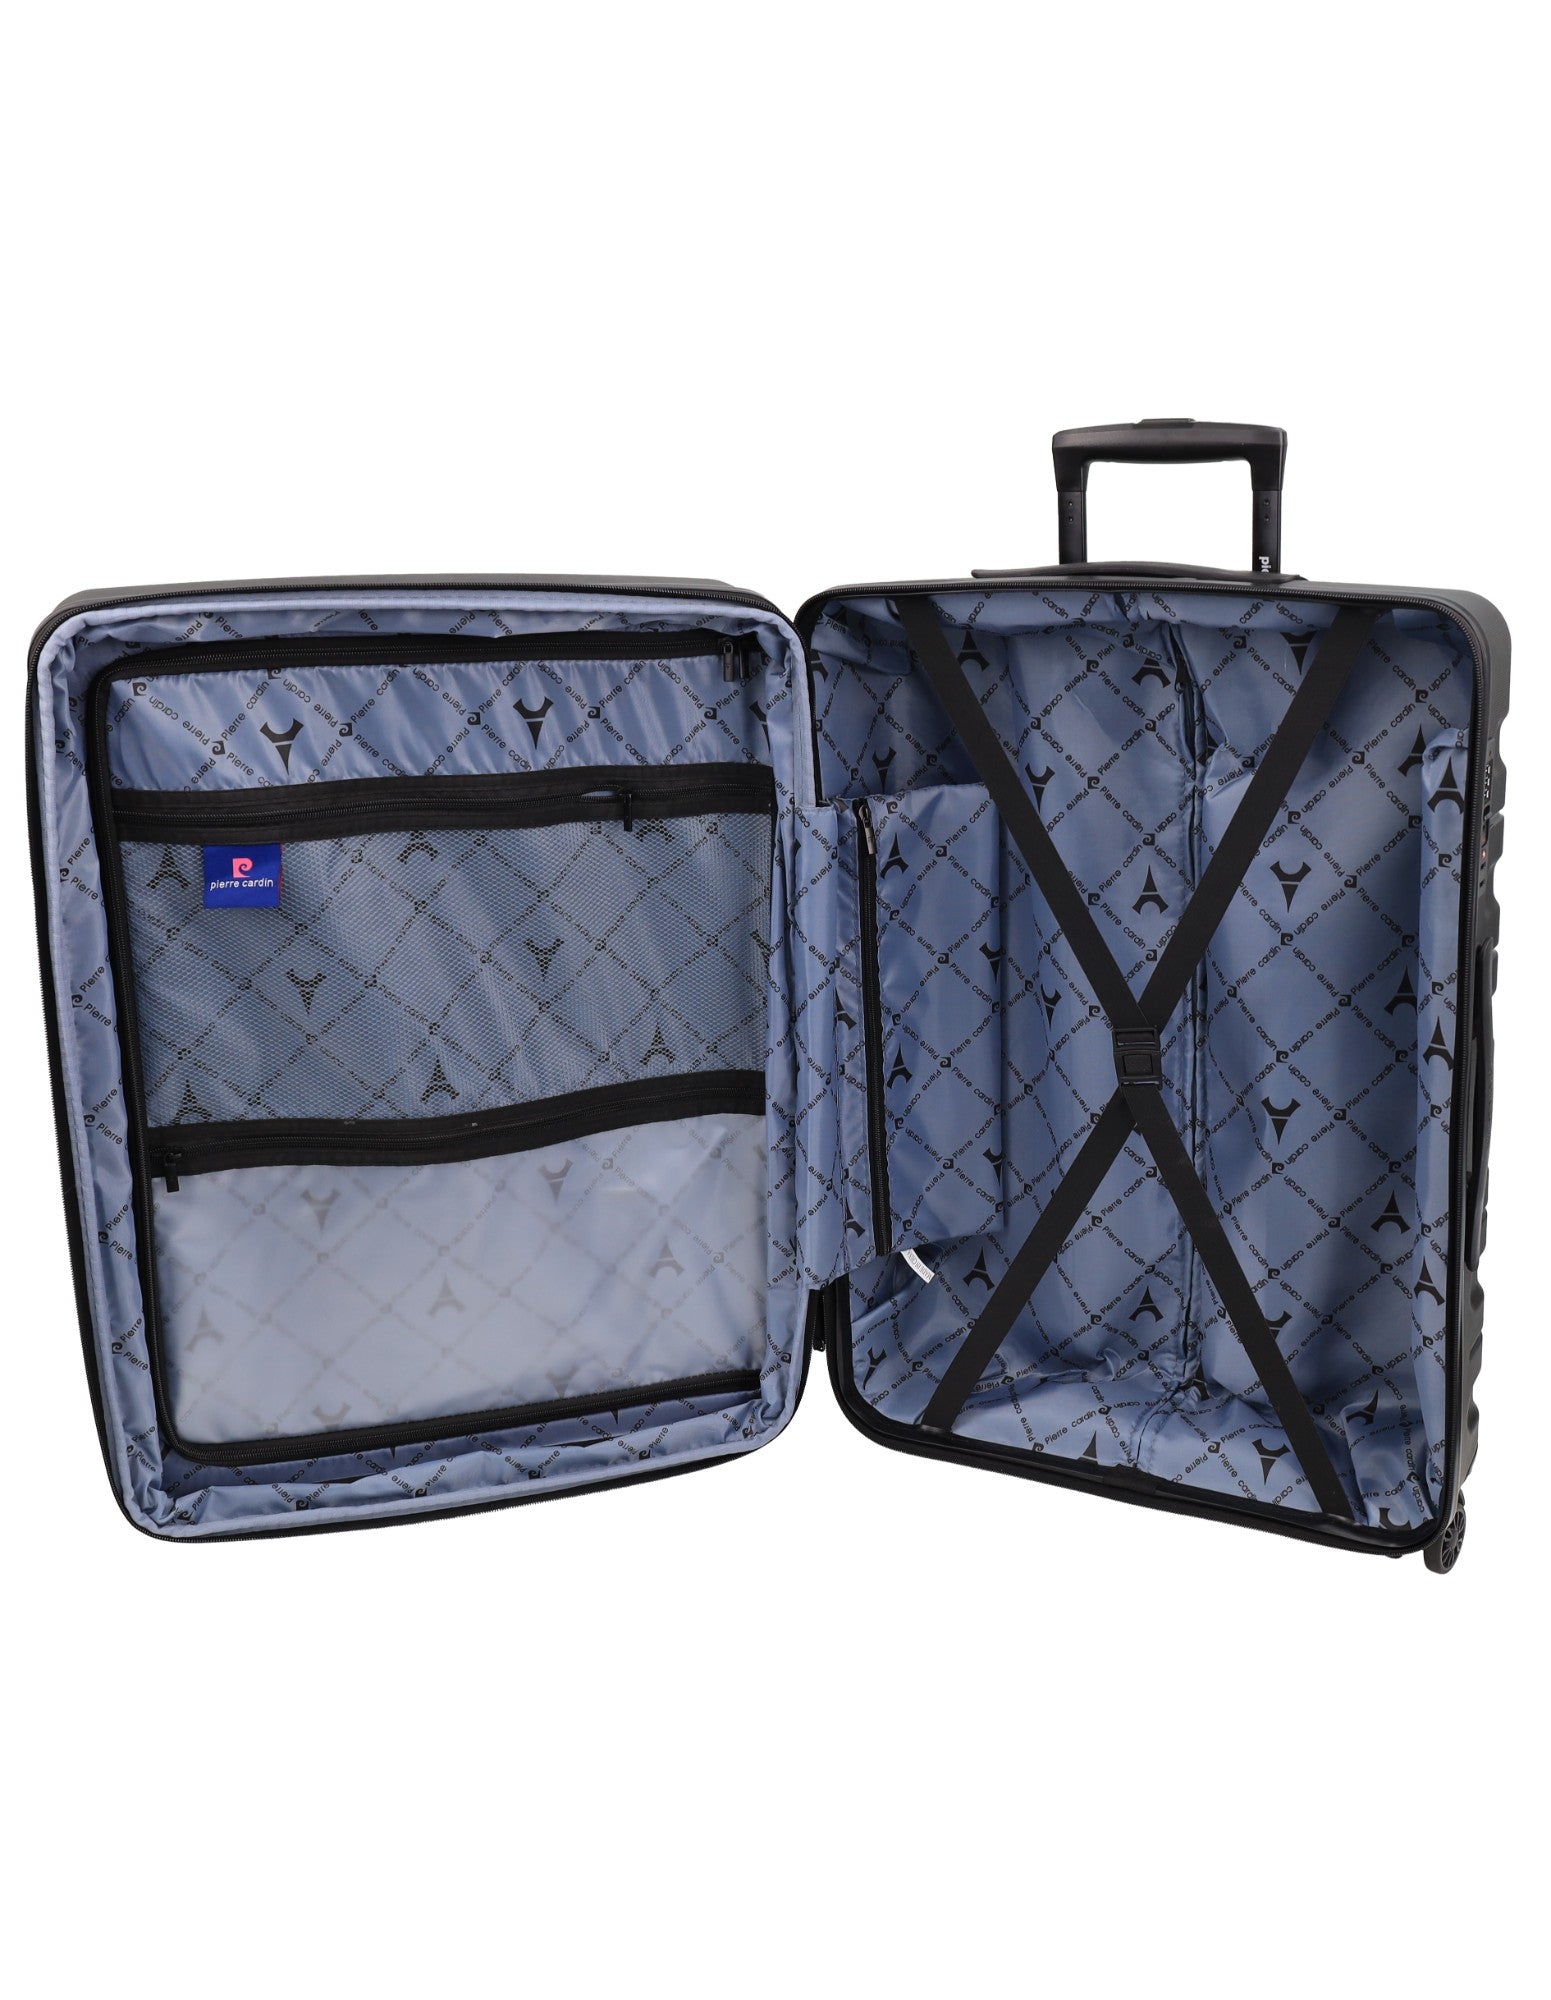 Pierre Cardin 80cm LARGE Hard Shell Suitcase in Black